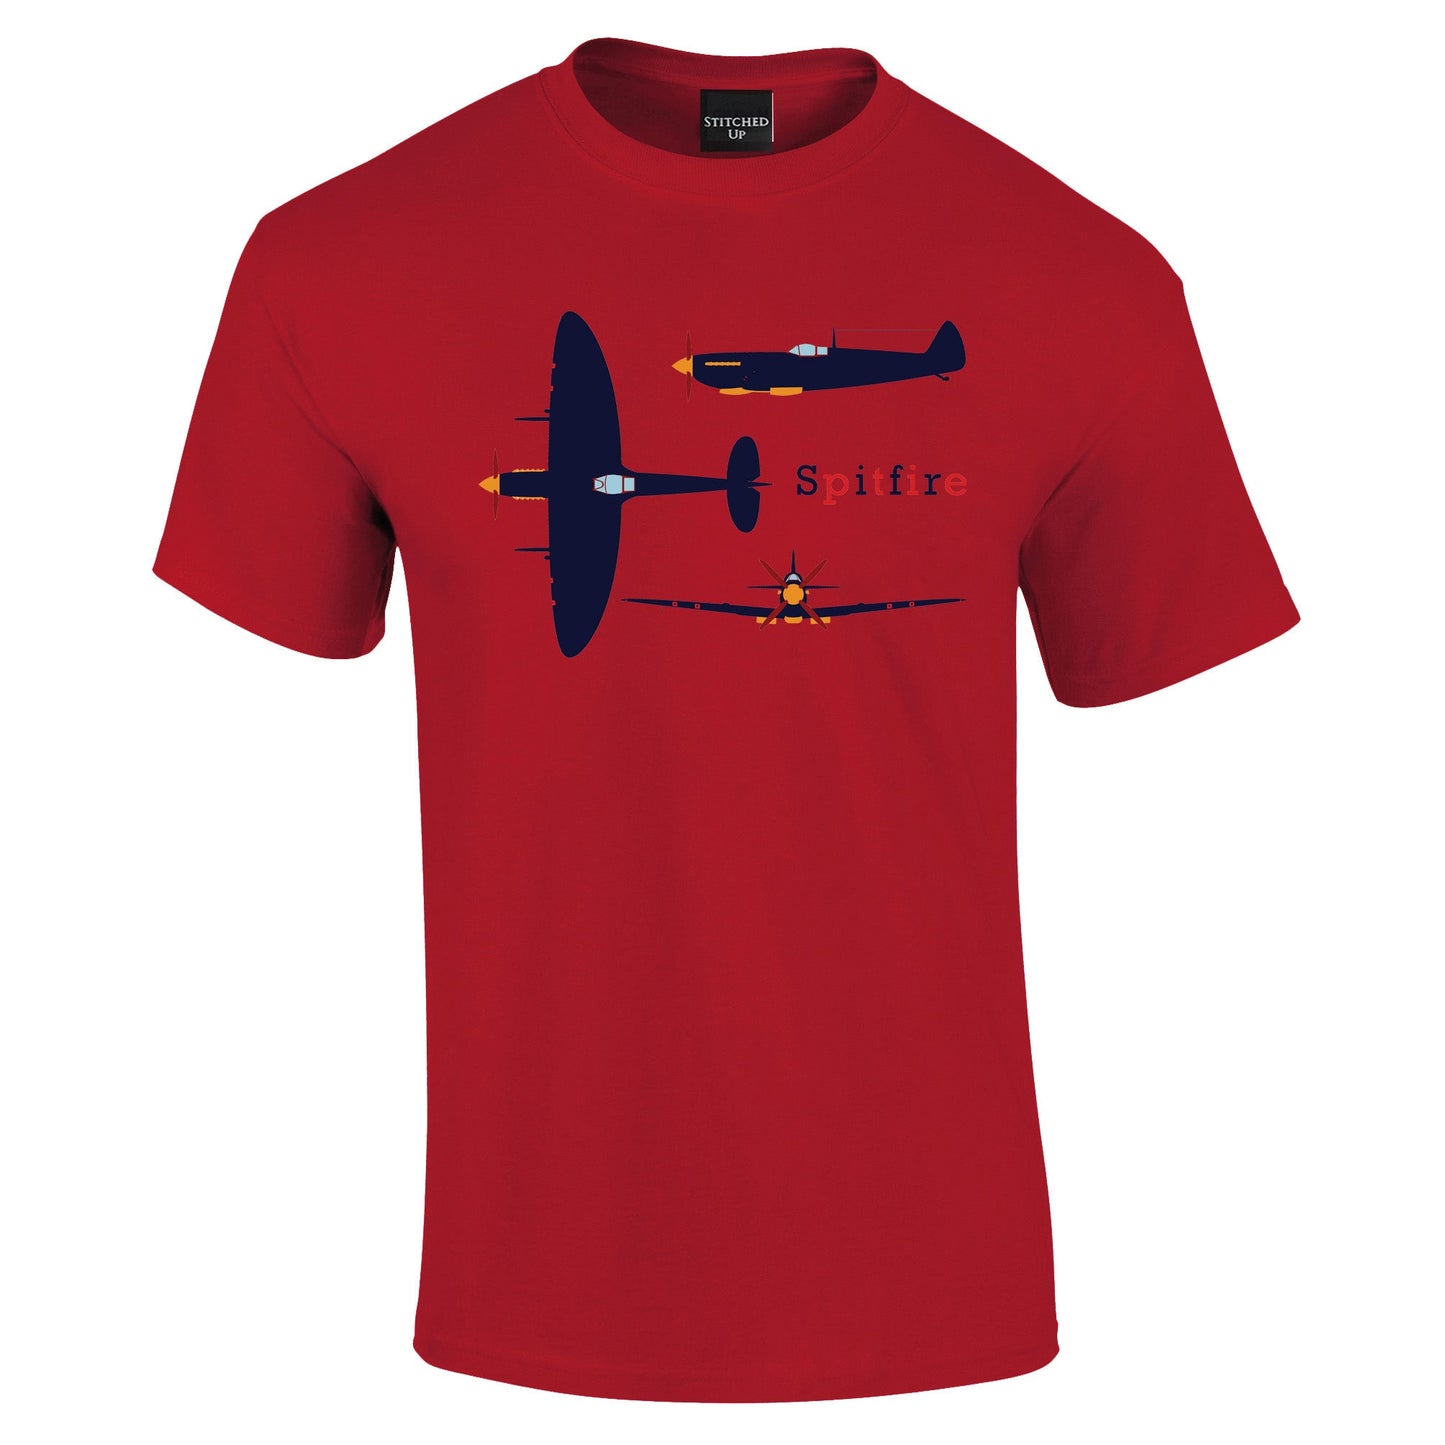 Spitfire profile  T-Shirt